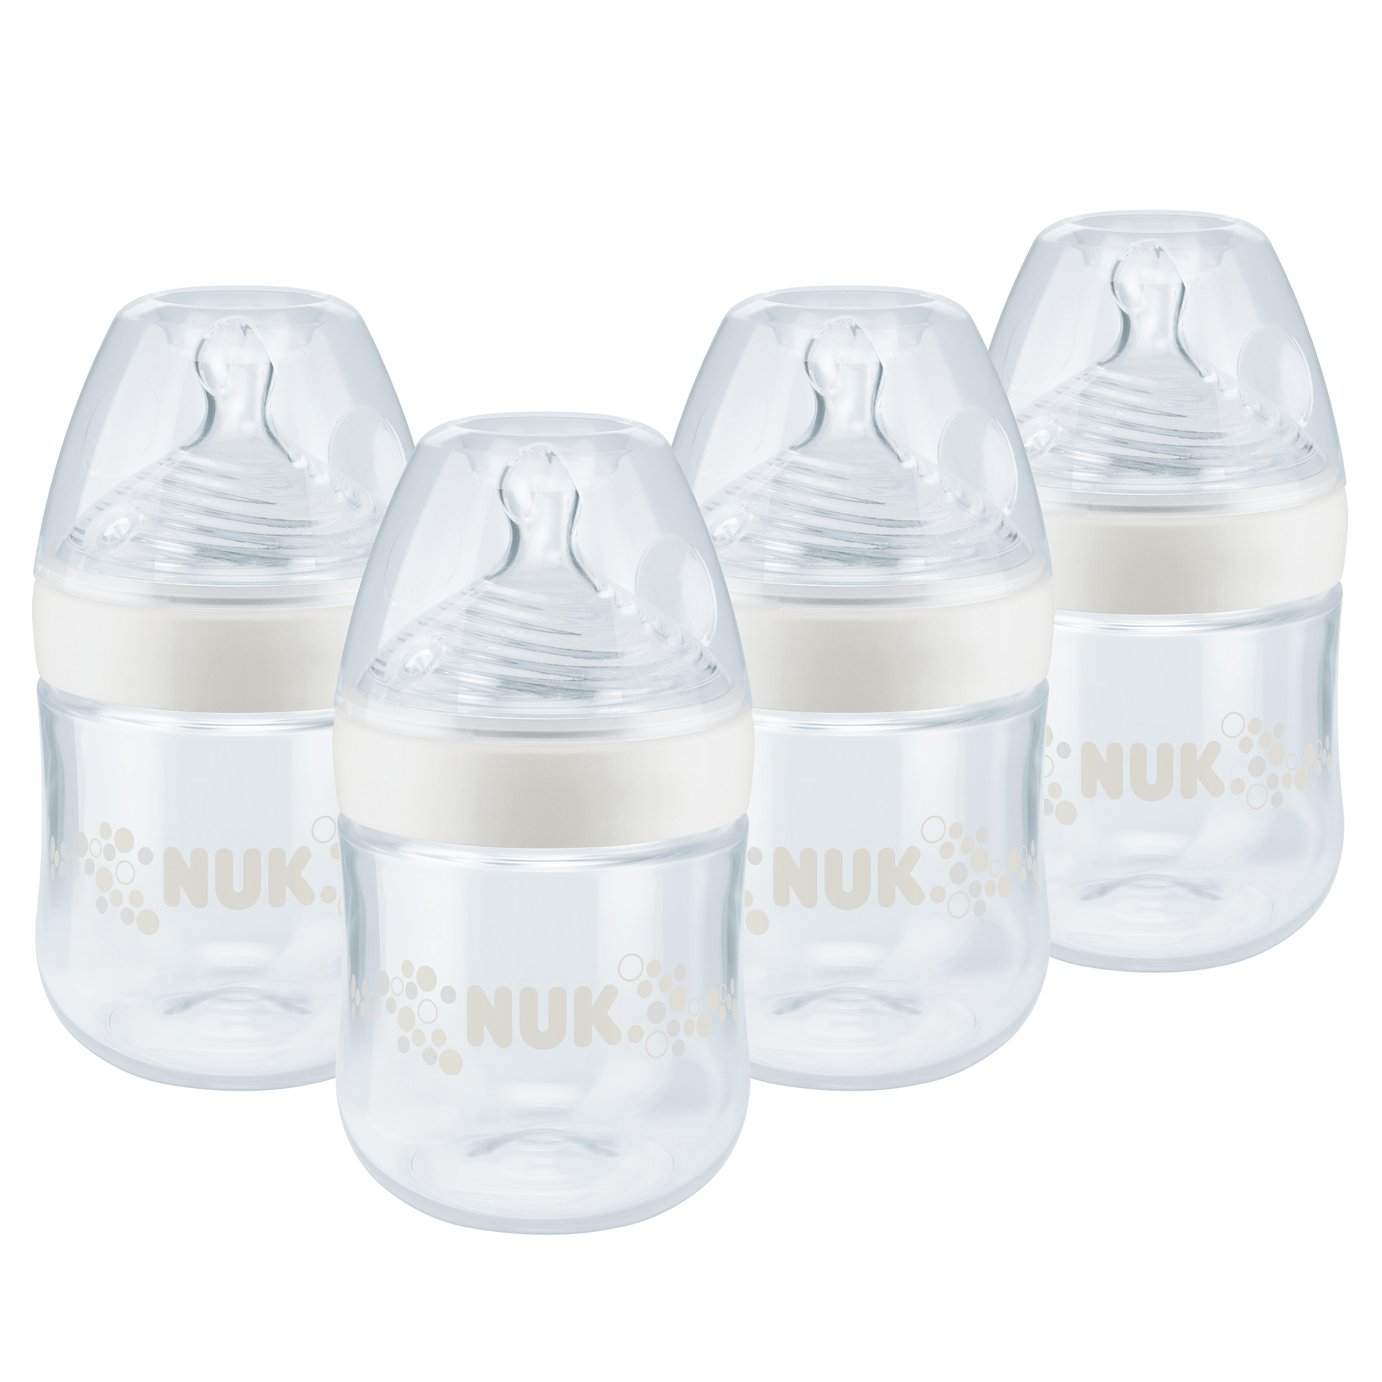 NUK Nature Sense 150ml Bottles - 4 Pack